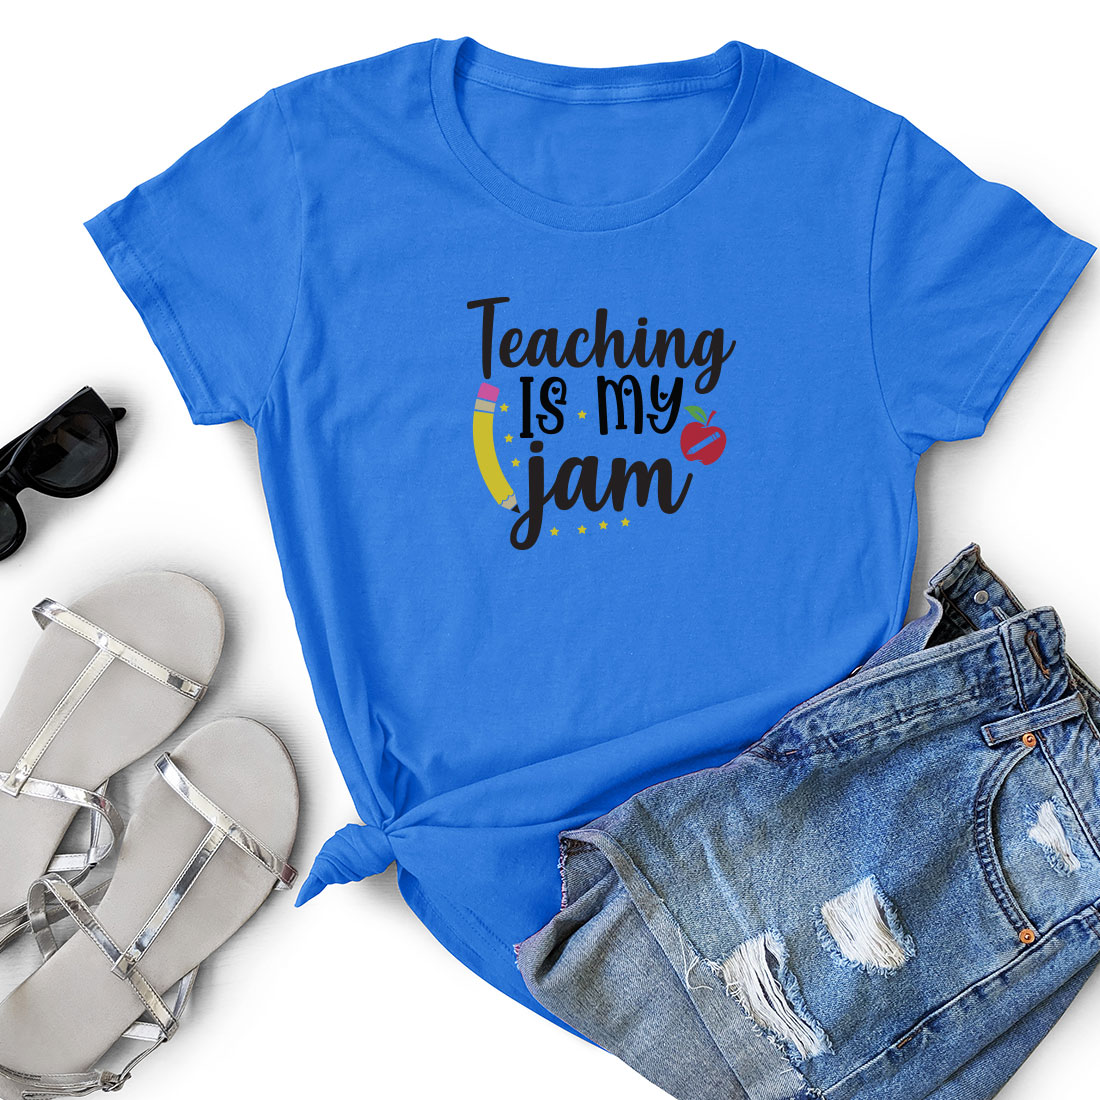 T - shirt that says teaching is my jam.